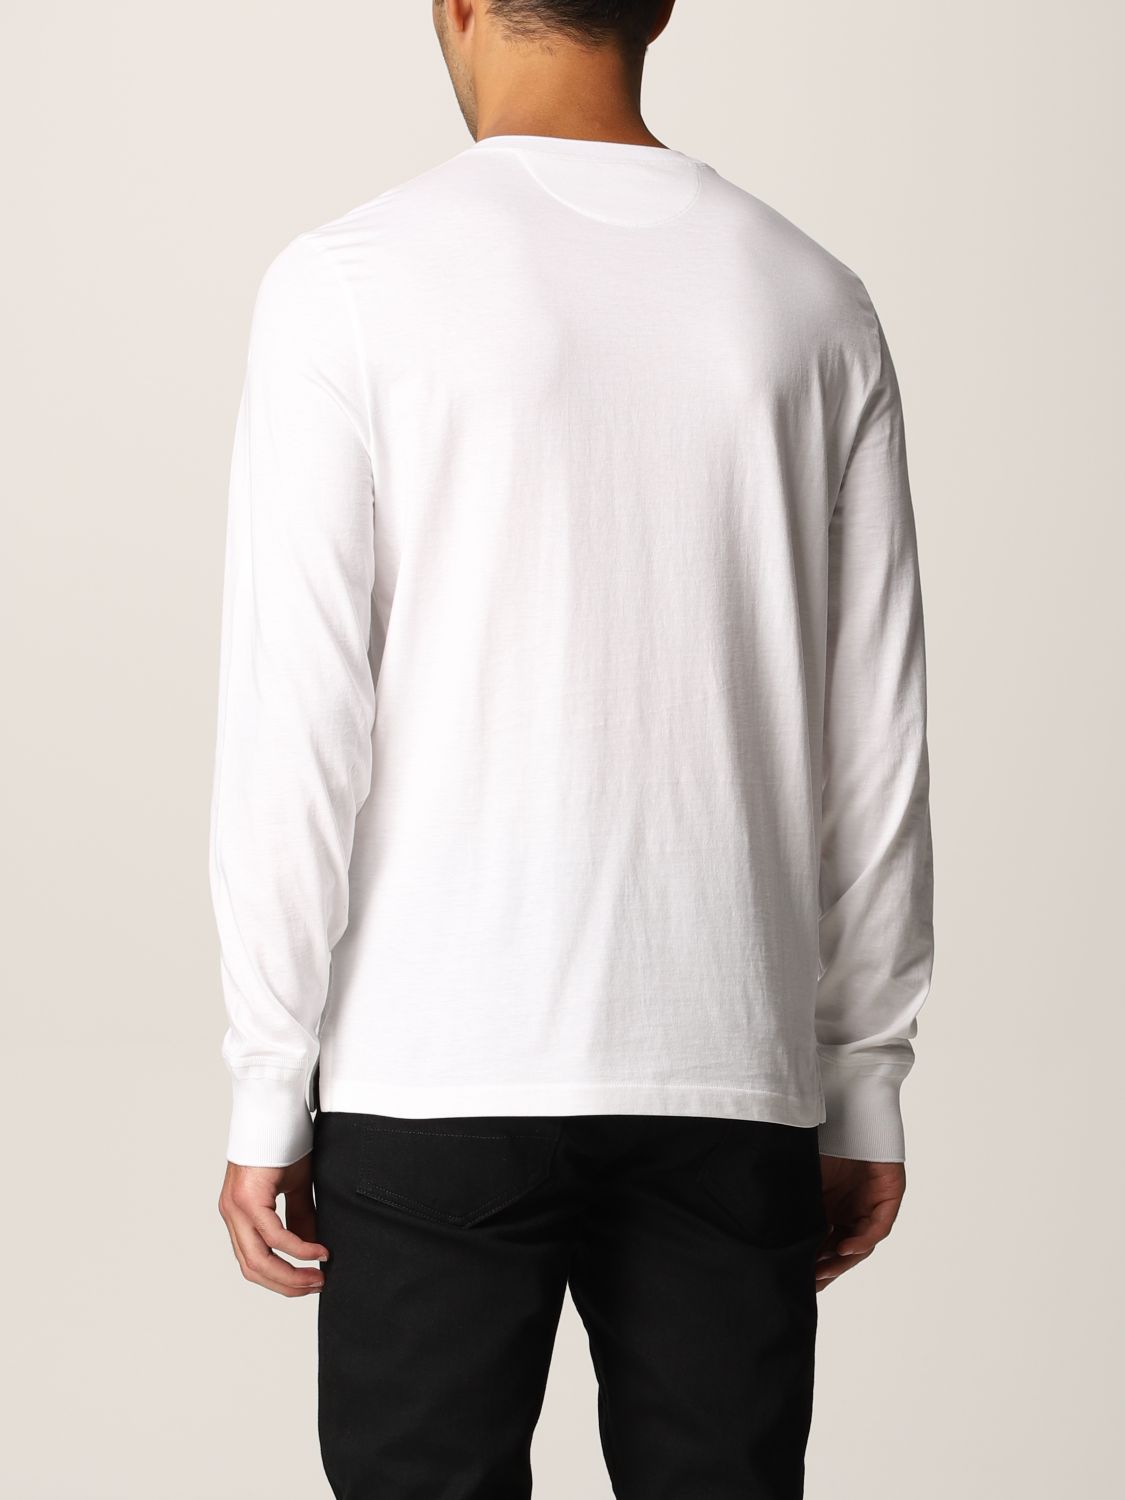 Polo Tom Ford: Camiseta hombre Tom Ford blanco 3